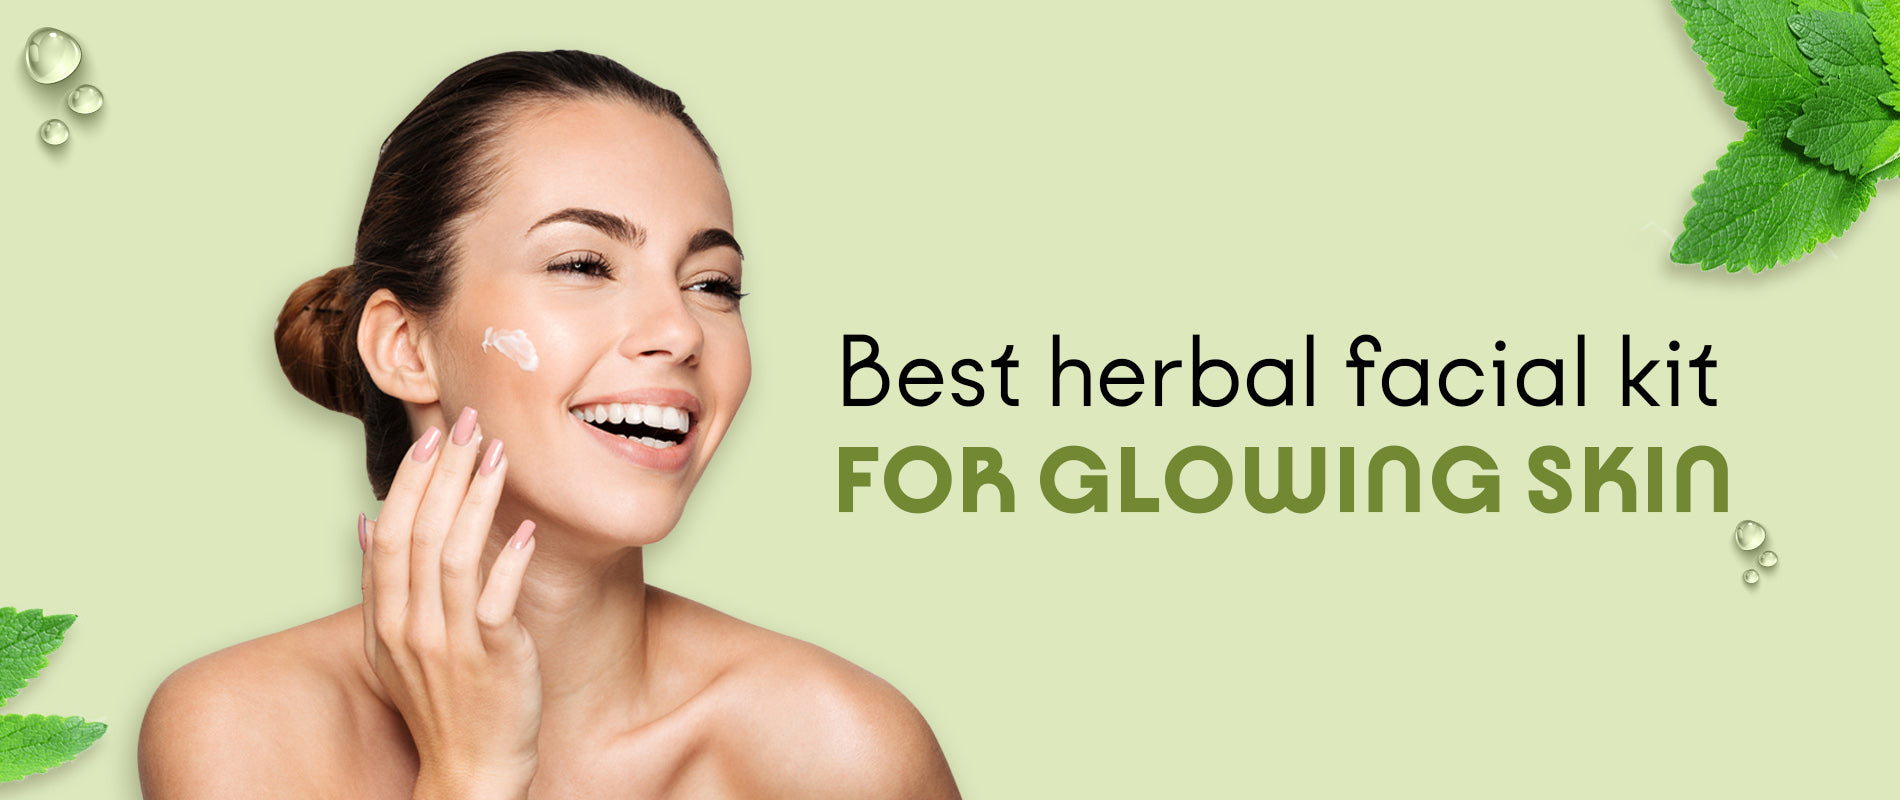 Best Herbal Facial Kit for Glowing Skin